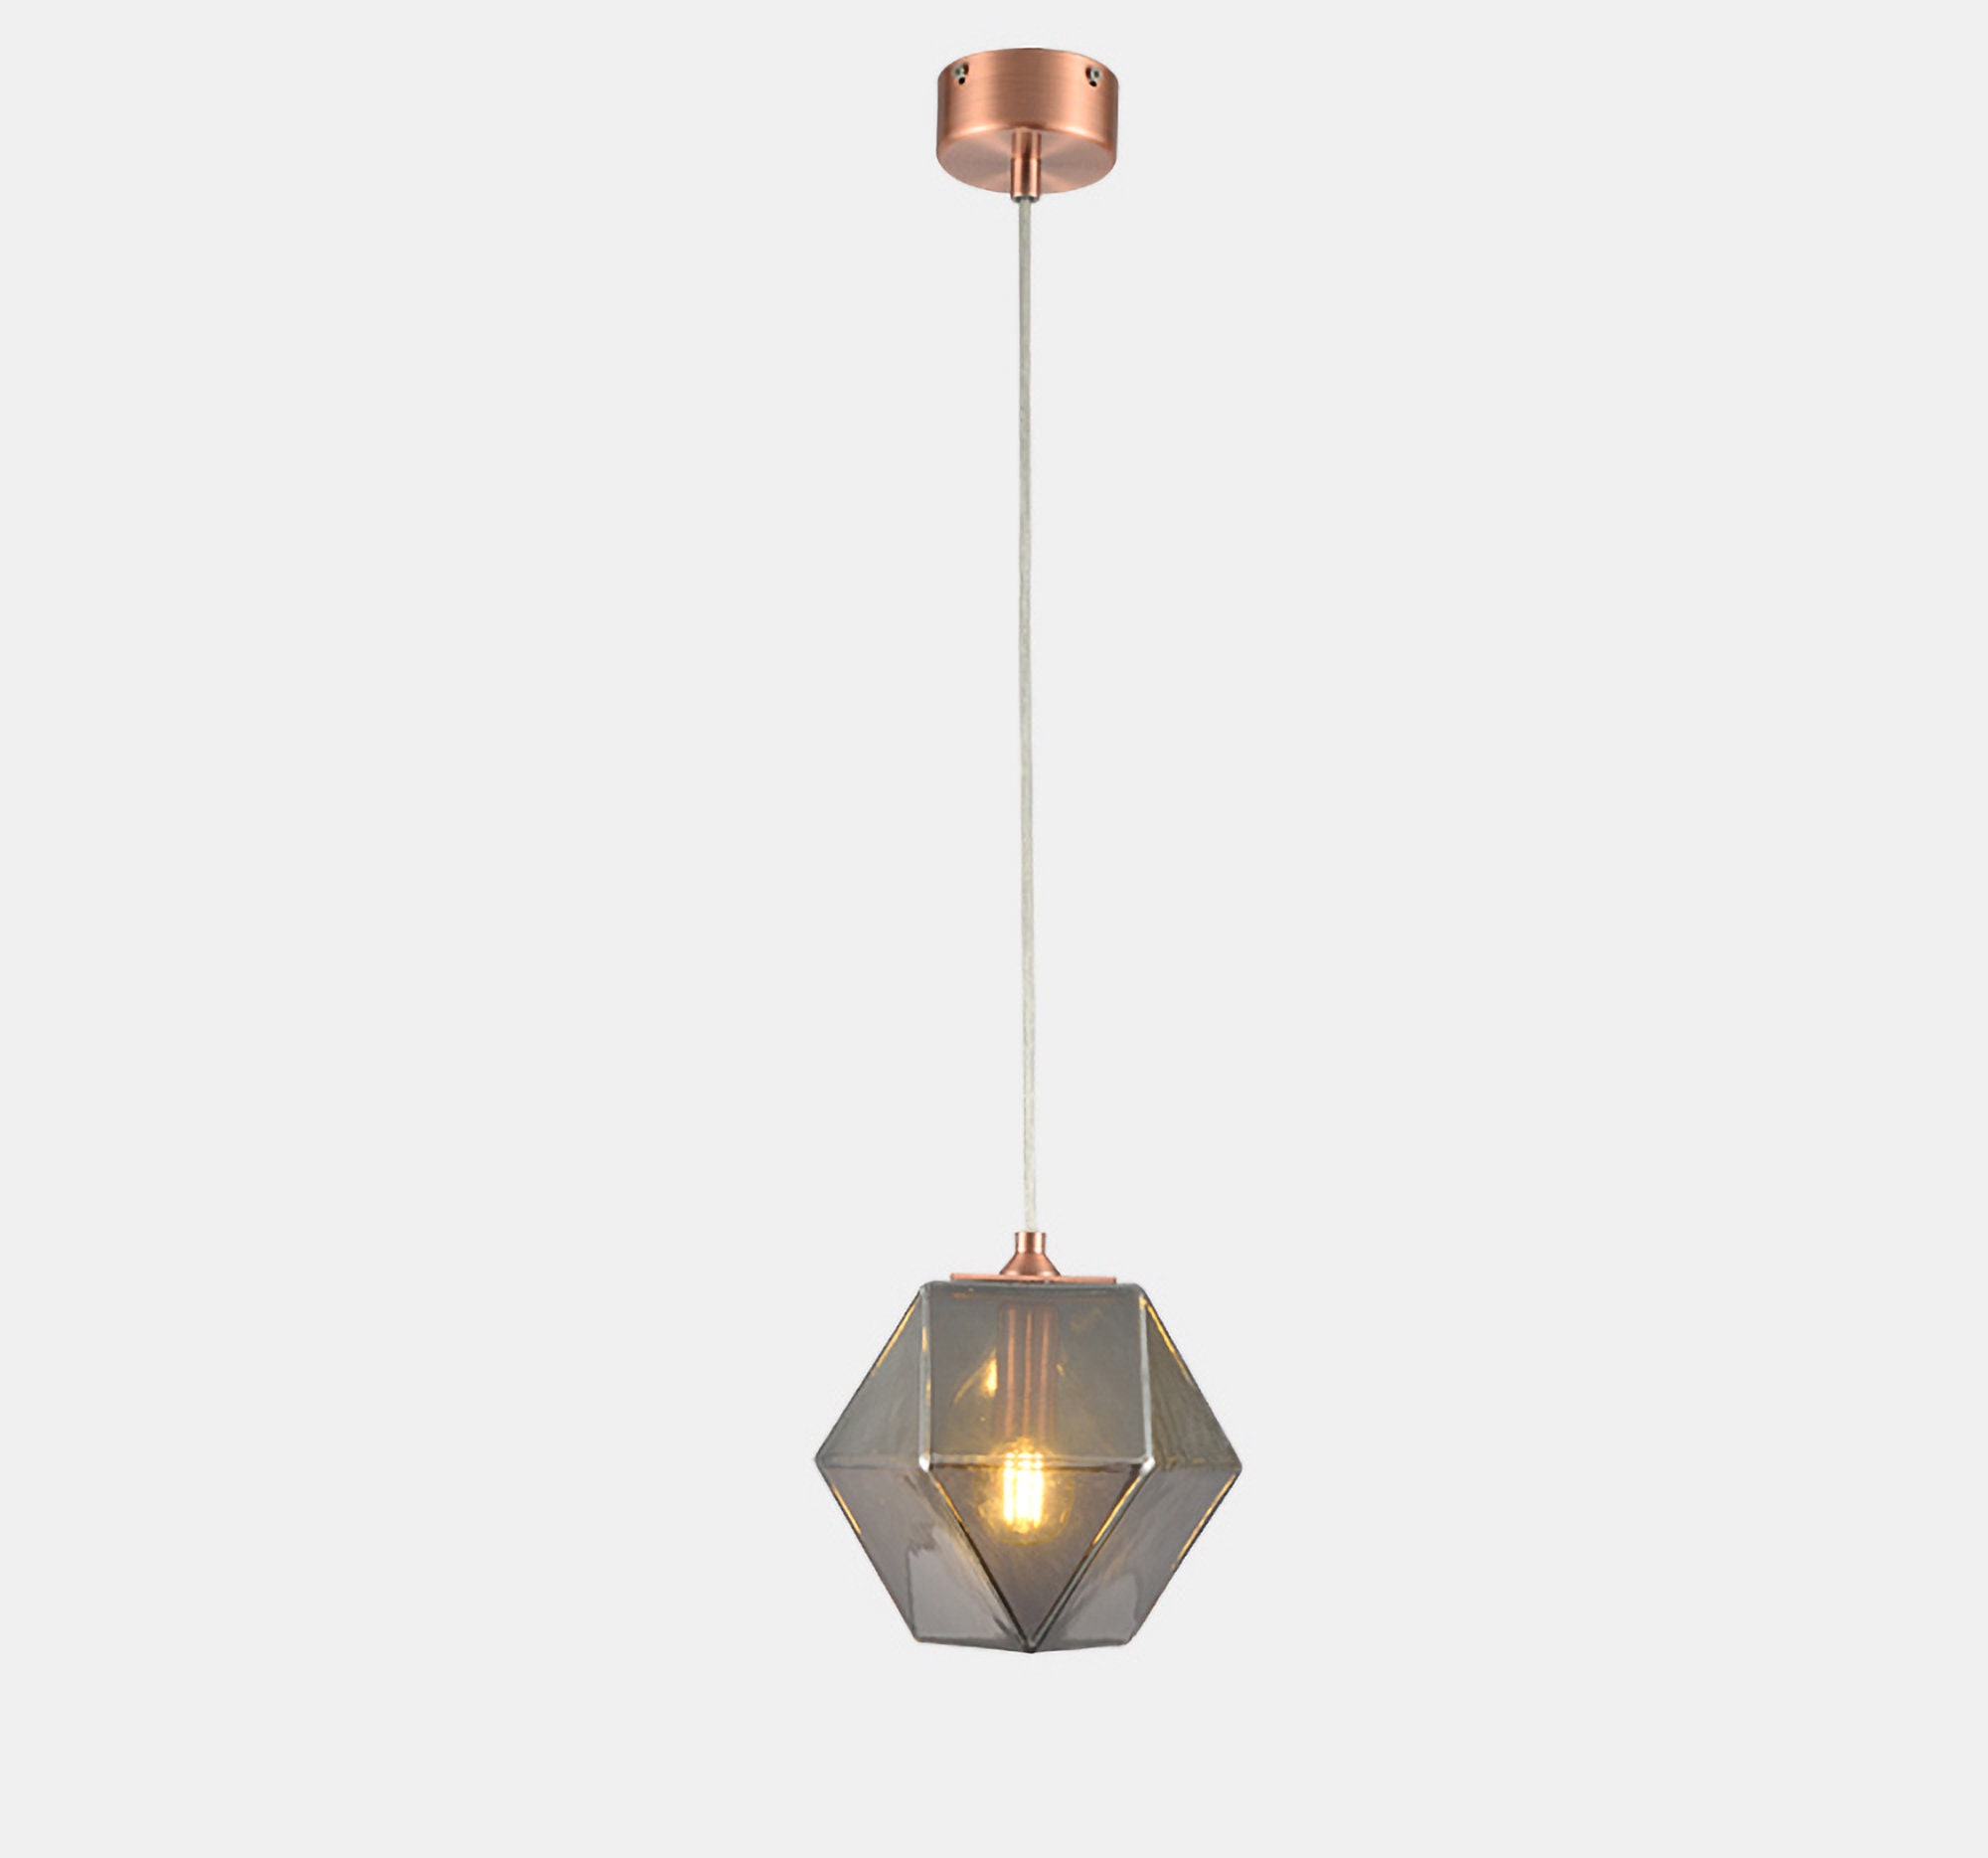 Geometric Modern minimalist creative glass small chandelier / | Etsy